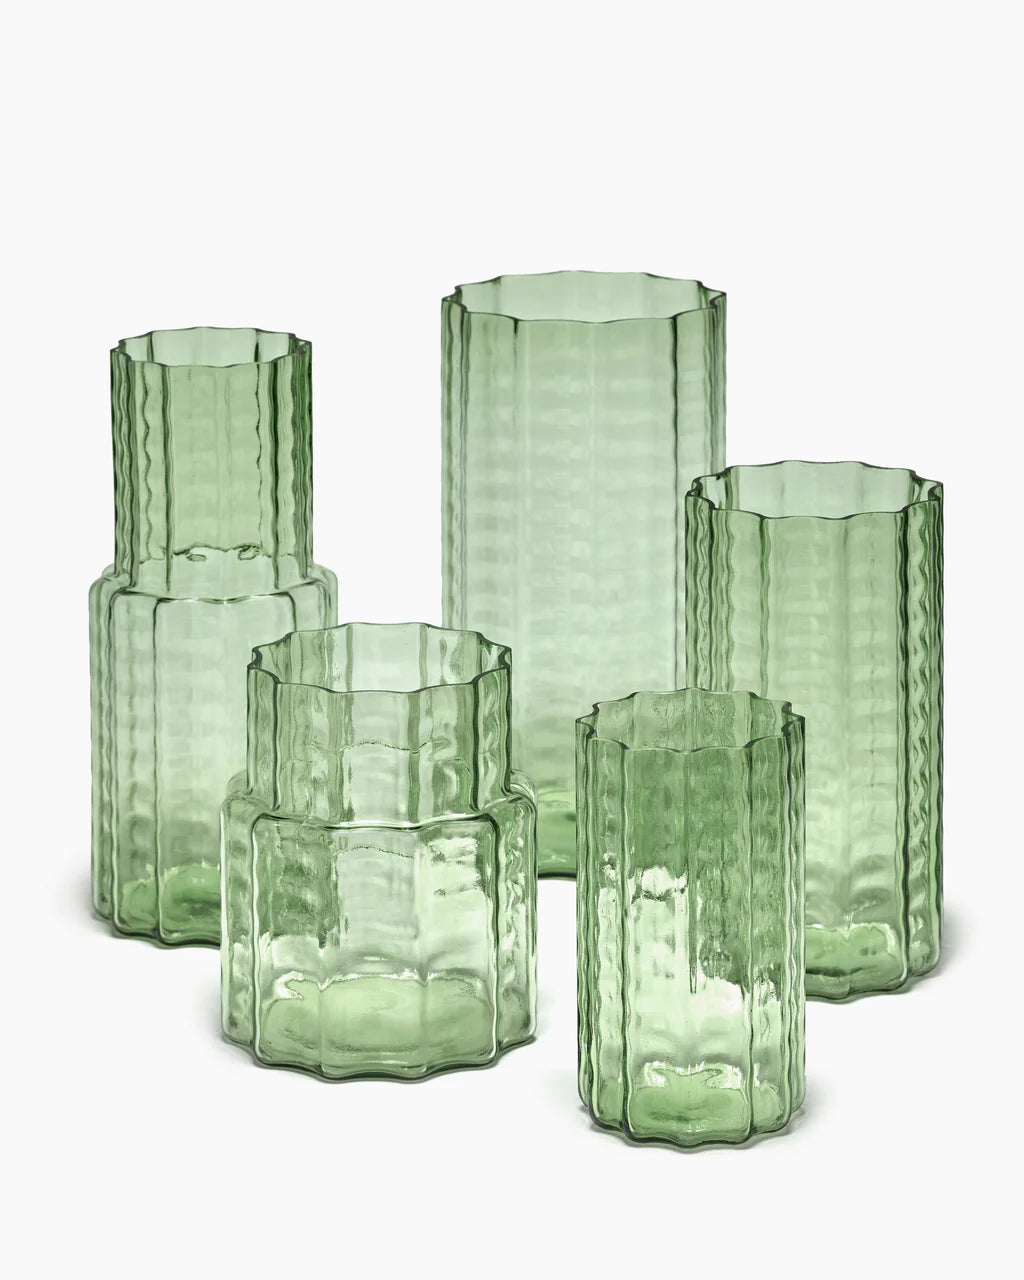 Serax - Vase 01 Green Transparant Waves by Ruben Deriemaeker